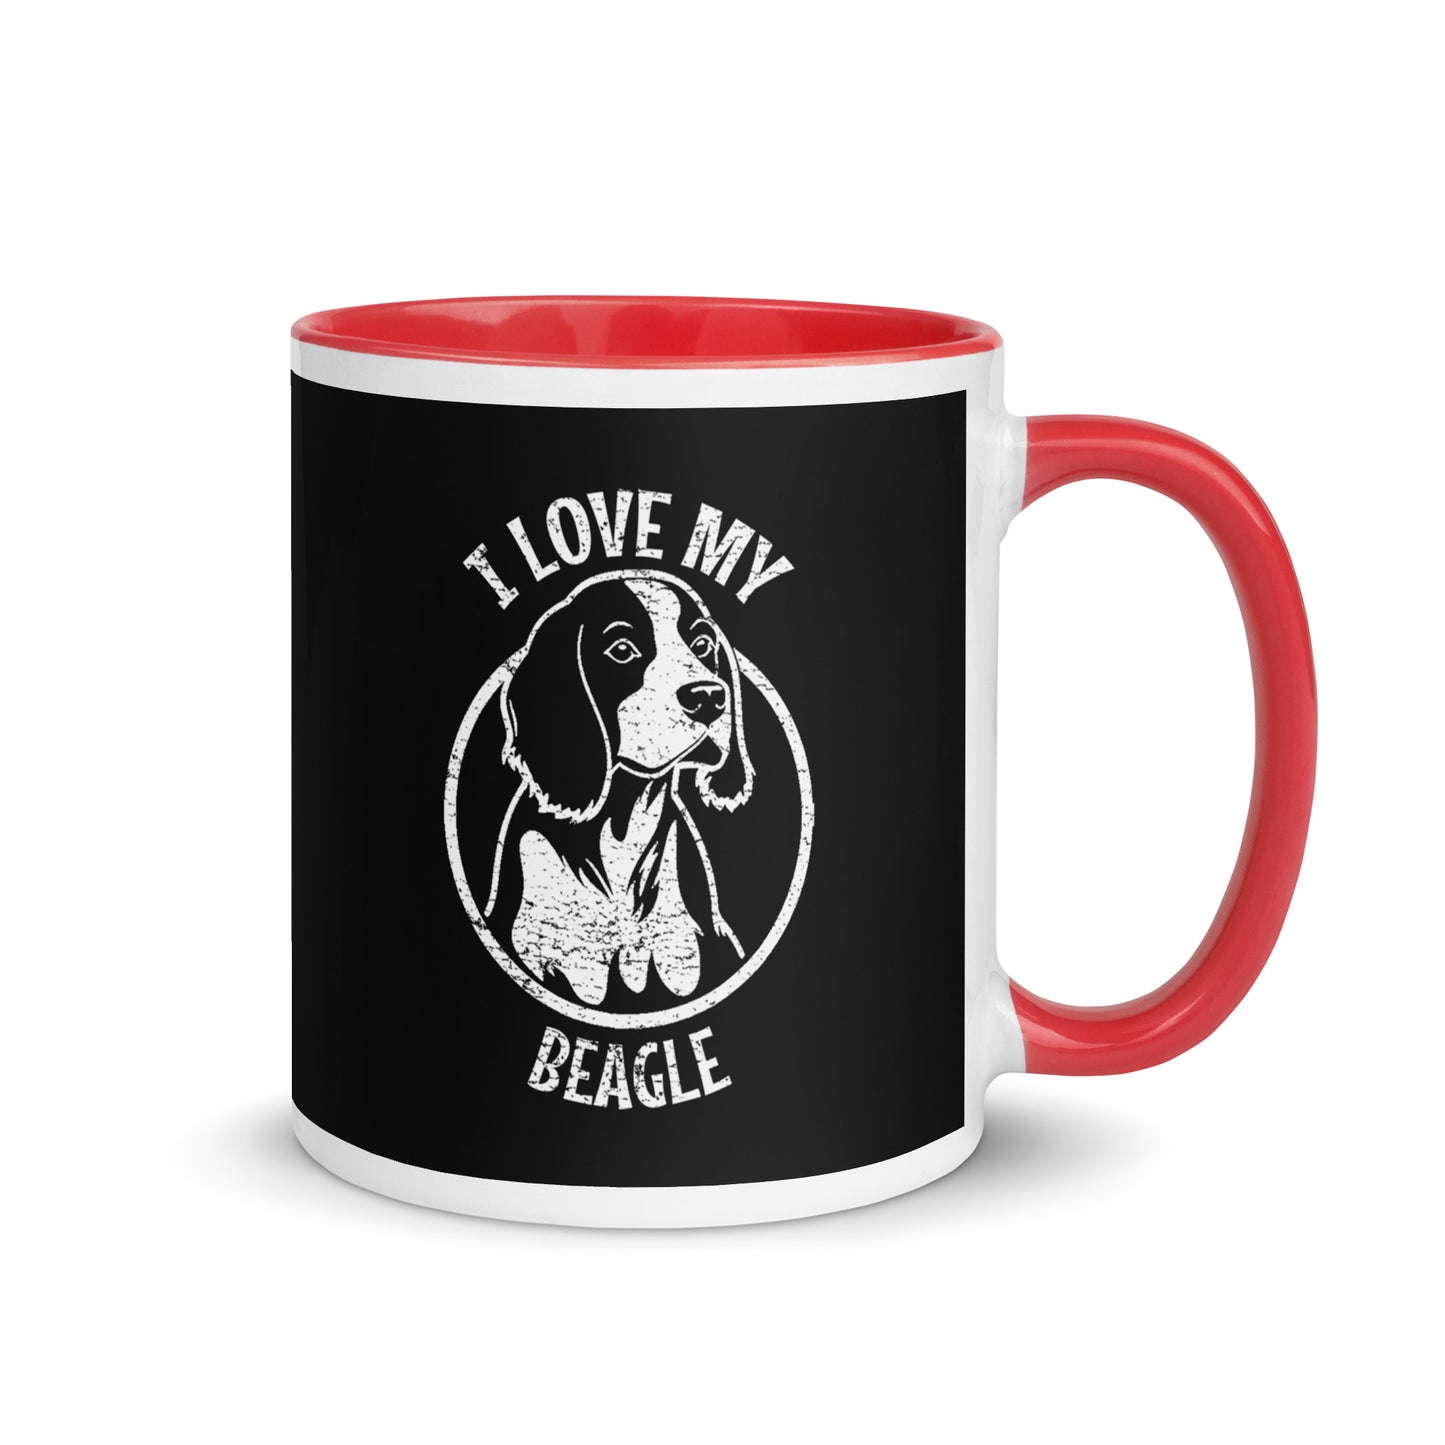 Beagle Mug, Beagle gift, gift for dog mom, custom dog gift, dog owner gift, pet memorial gift